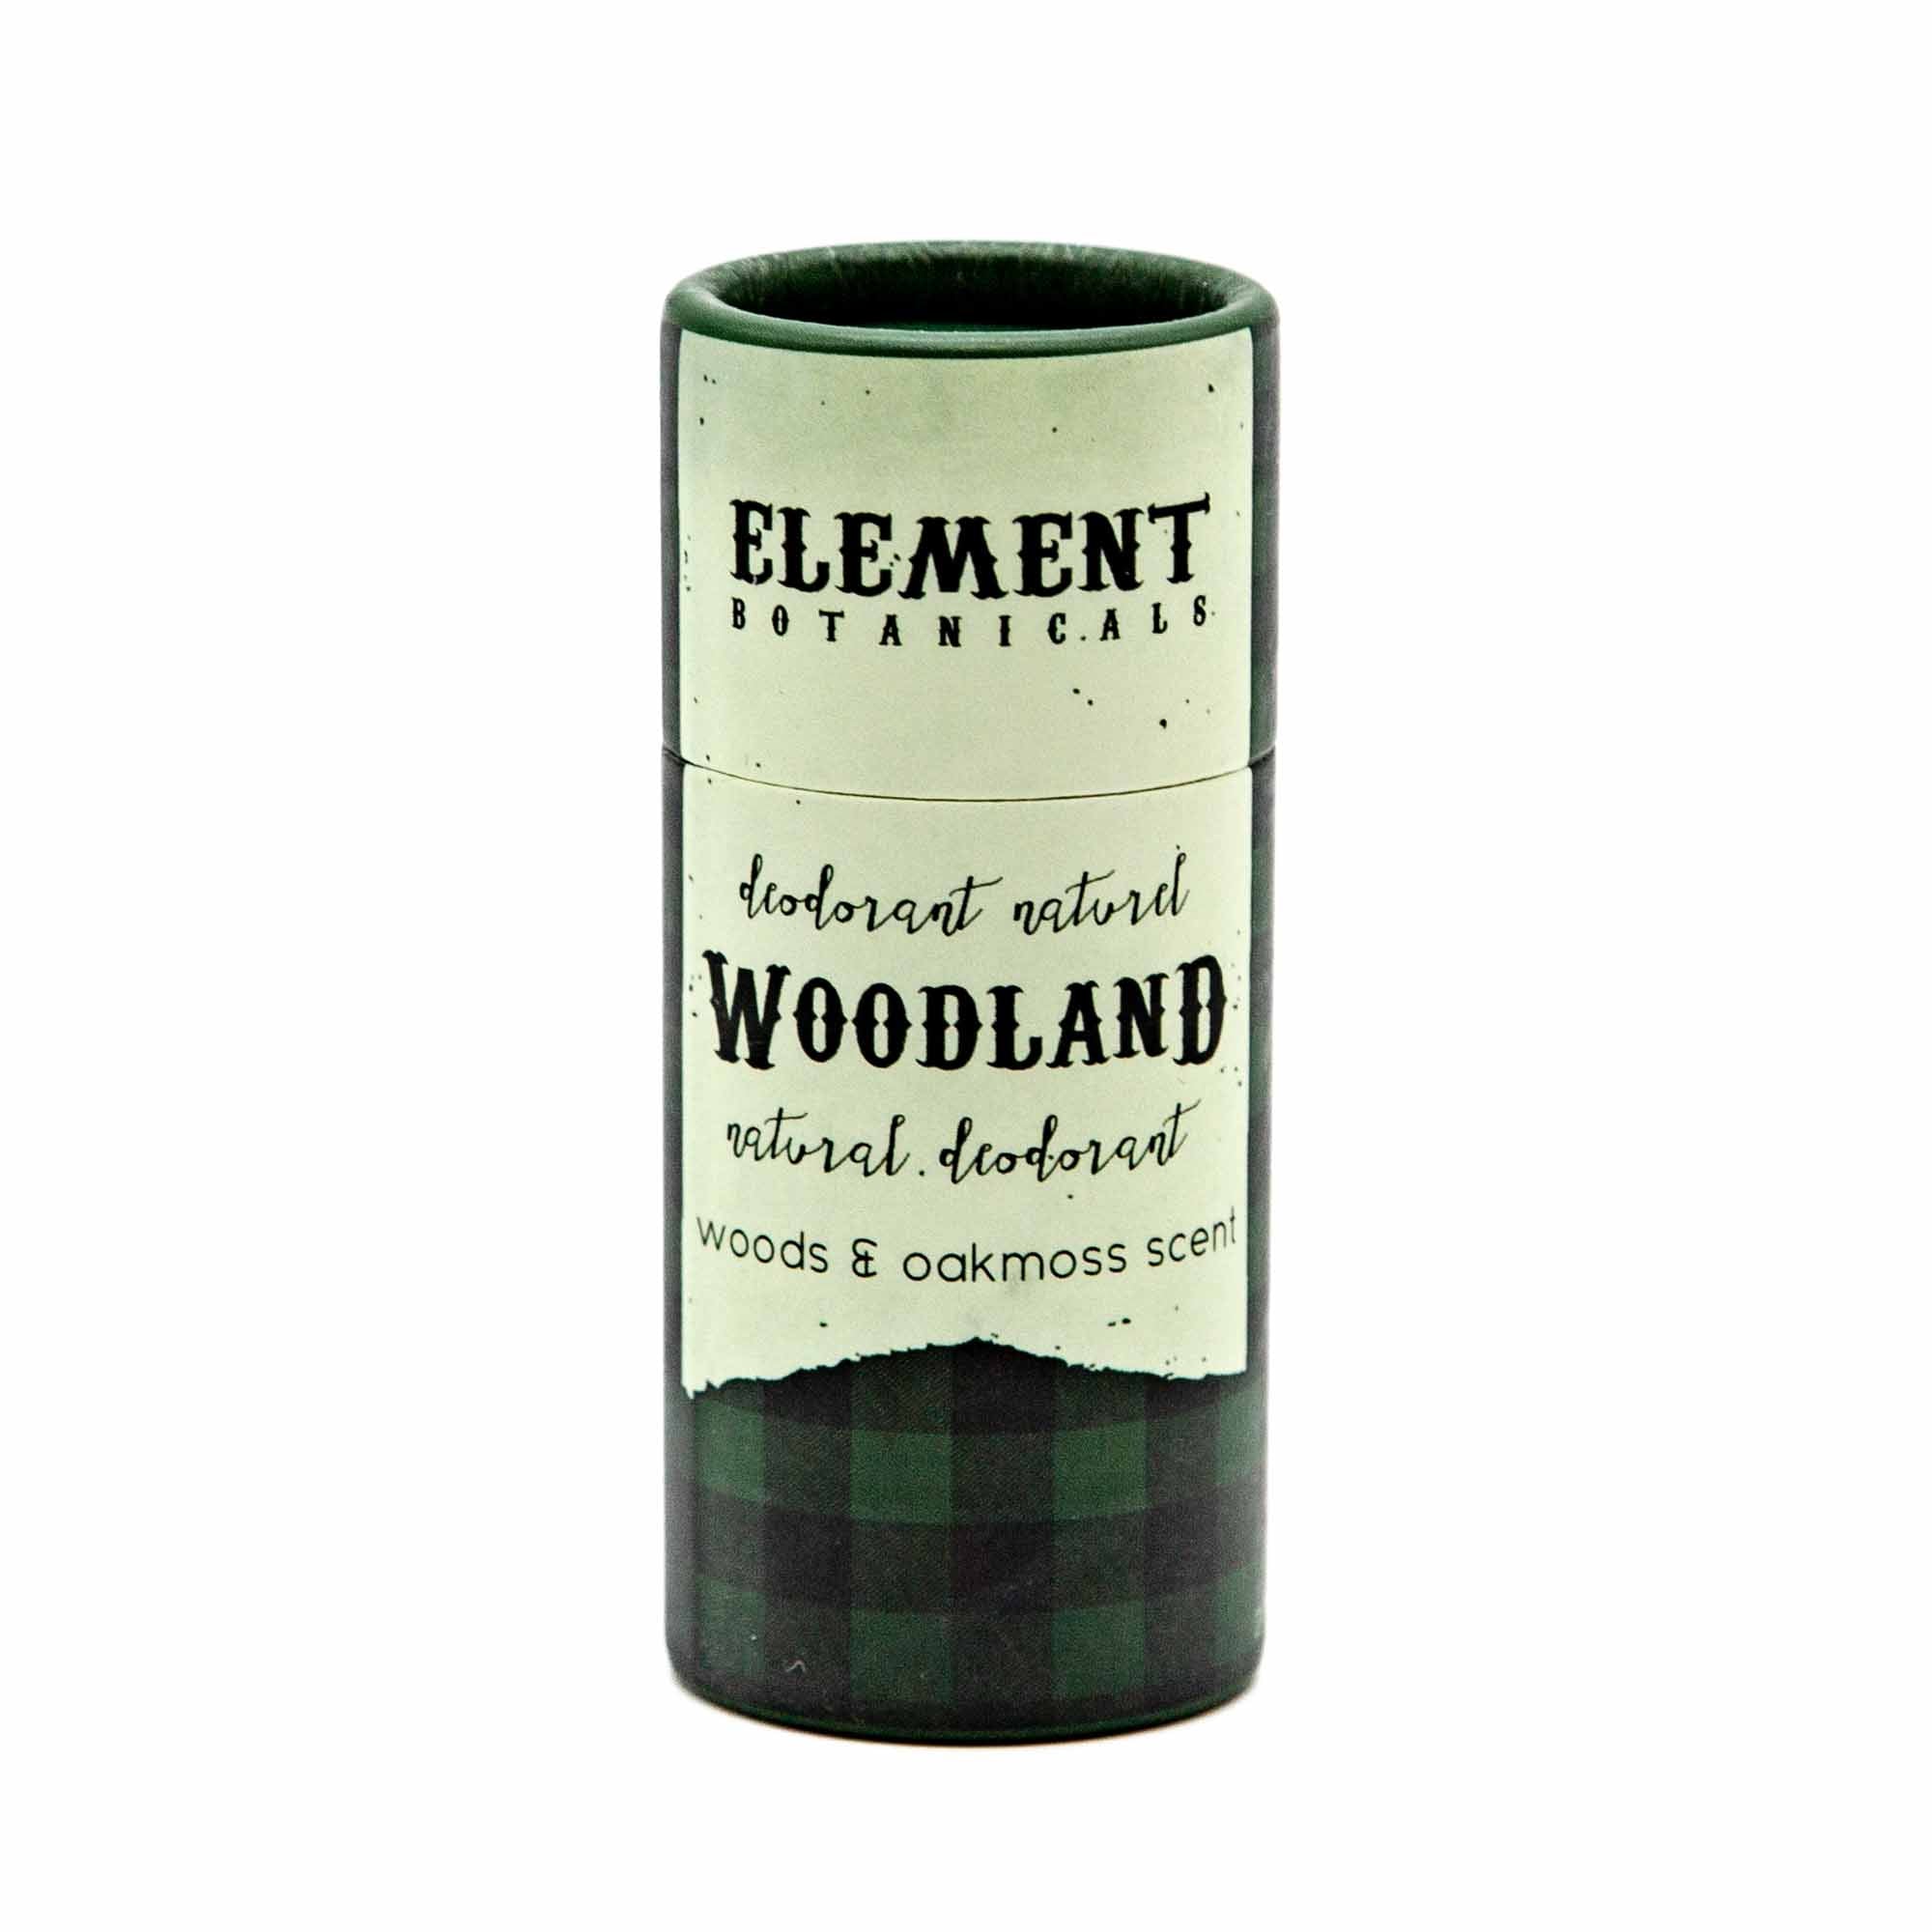 Element Botanicals Natural Deodorant - Woodland - Mortise And Tenon